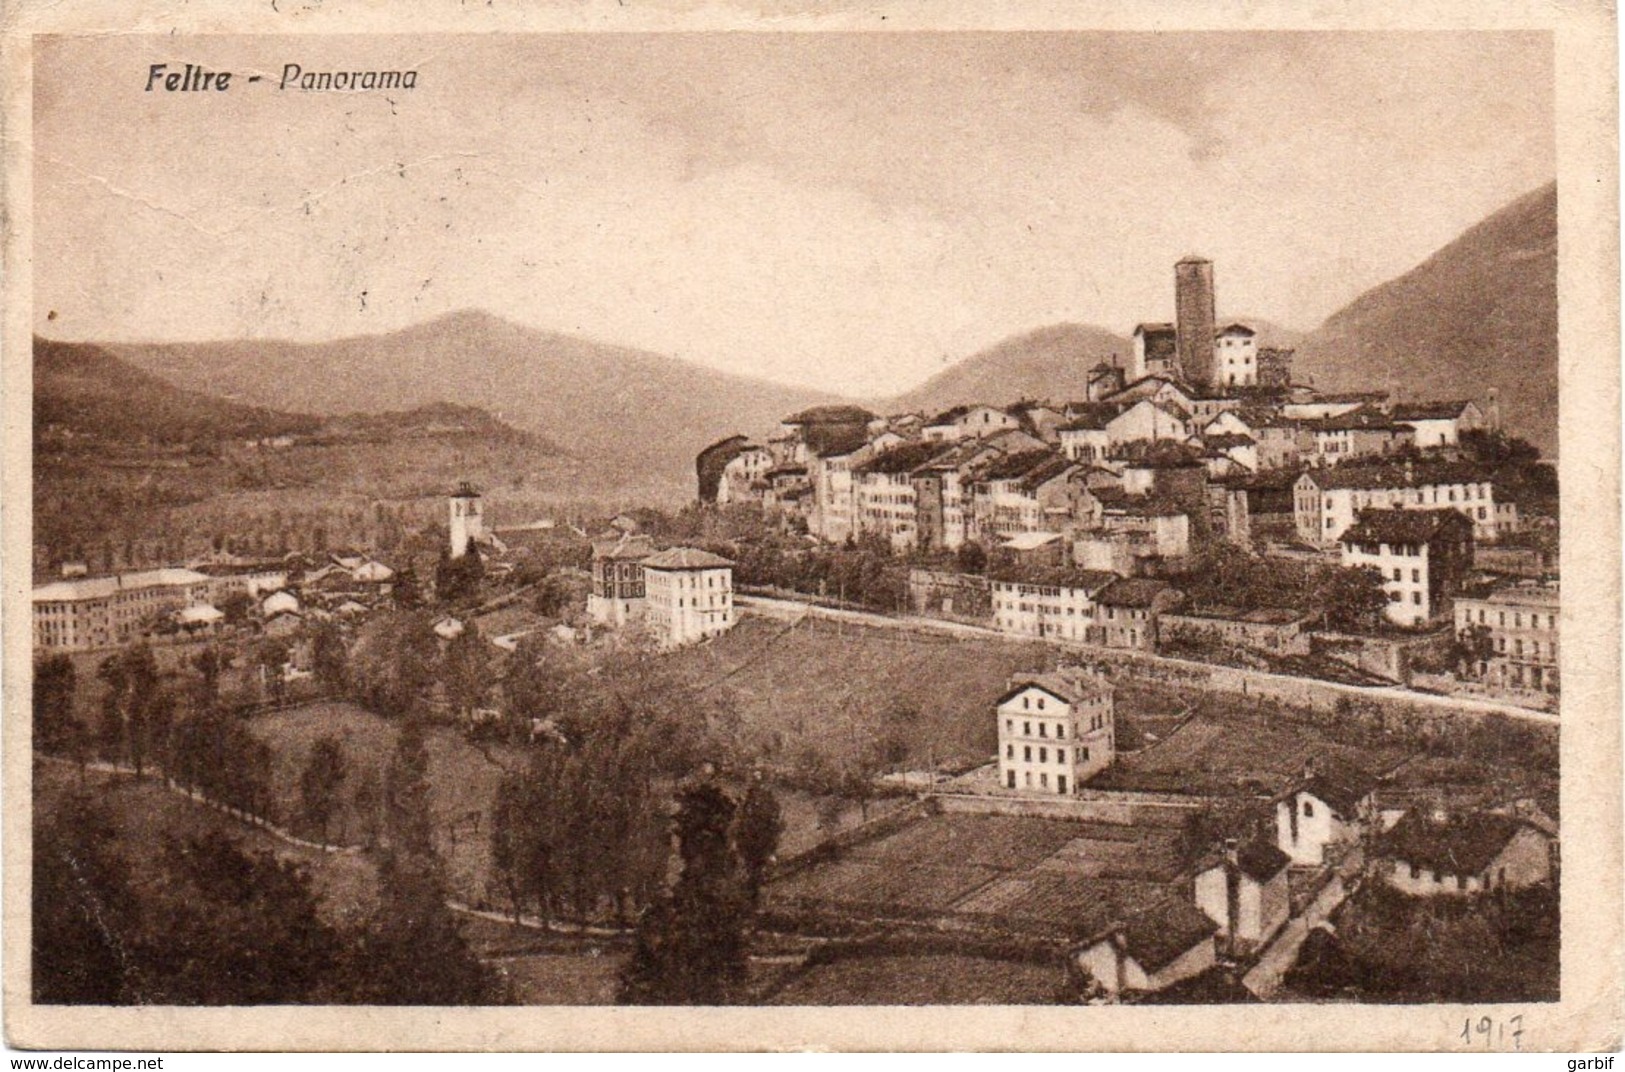 Belluno - Feltre - Panorama - Fp 1917 - Belluno